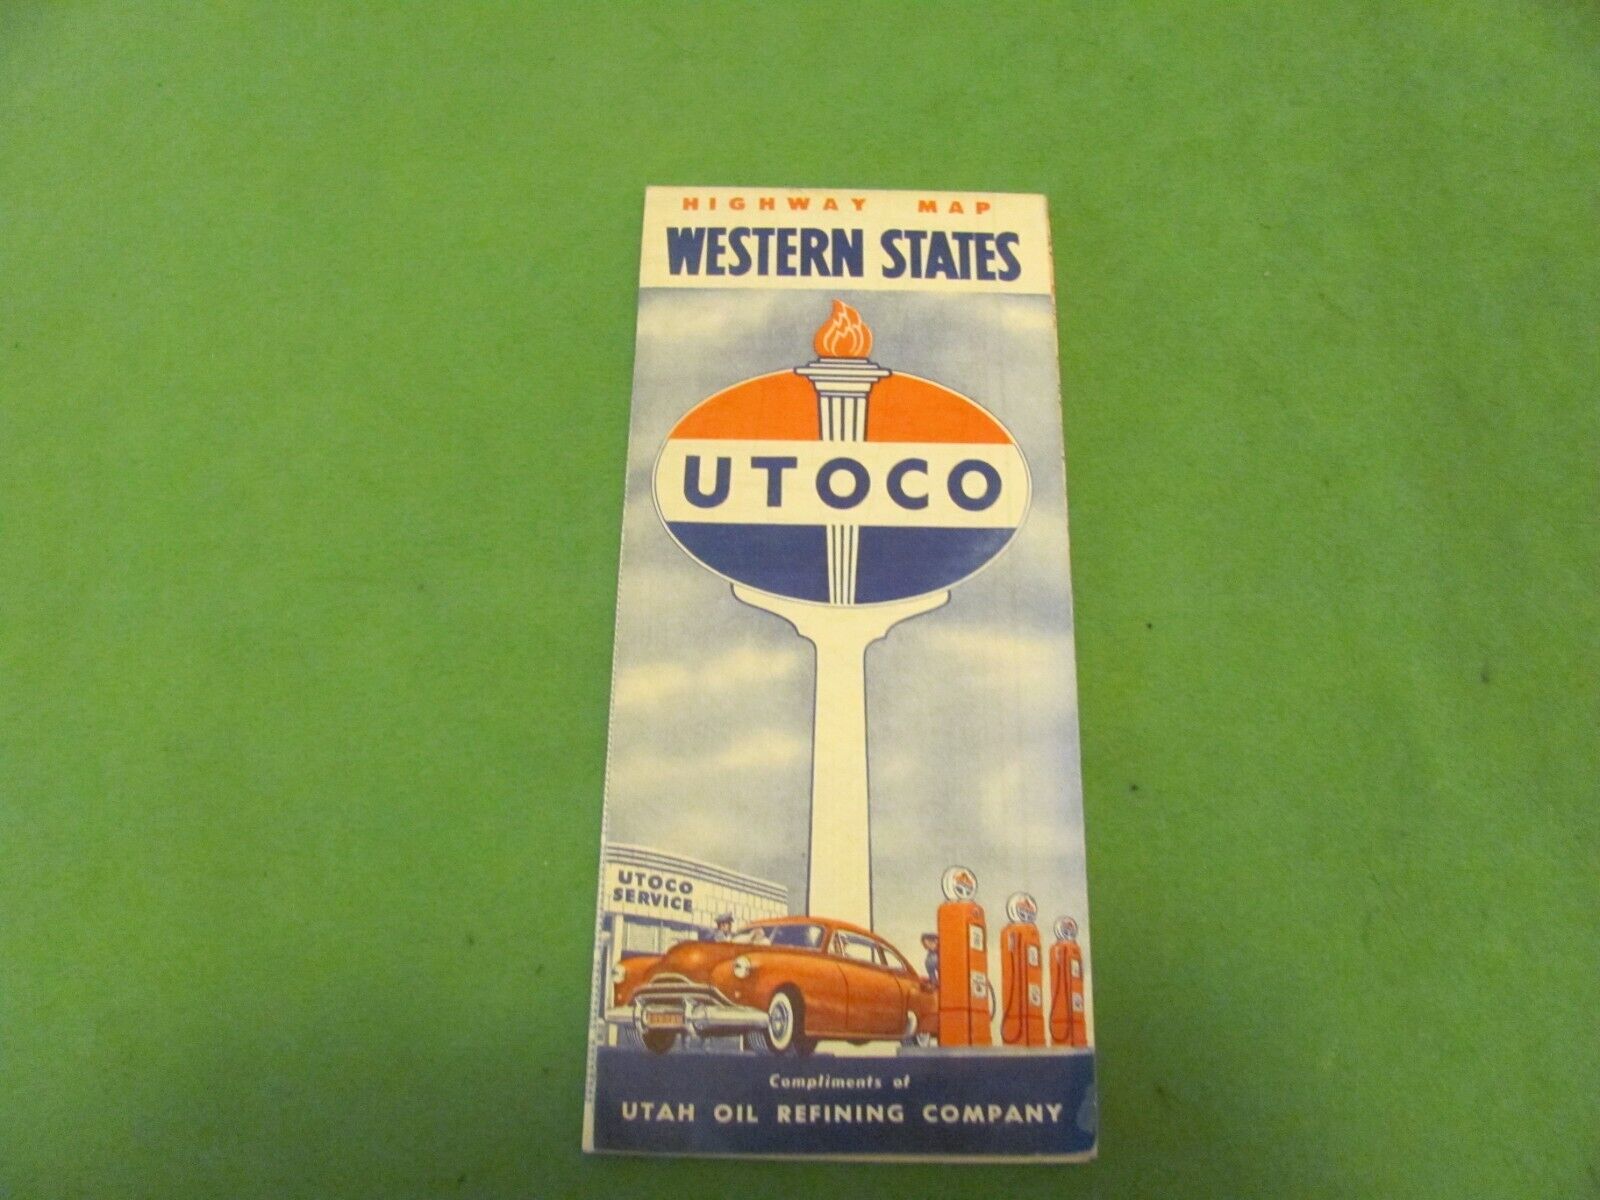 Vintage UTOCO Gas Station Highway Map Western States 1950s Utah Oil Refining.